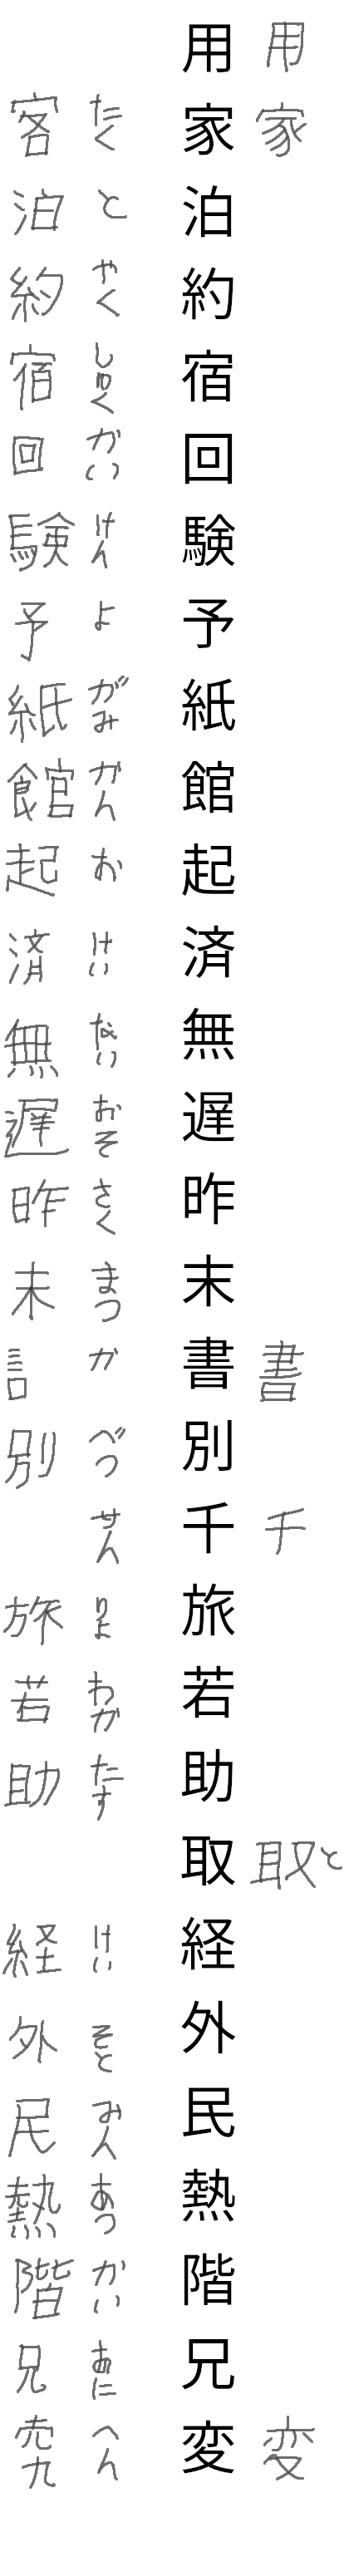 kanji test row 20